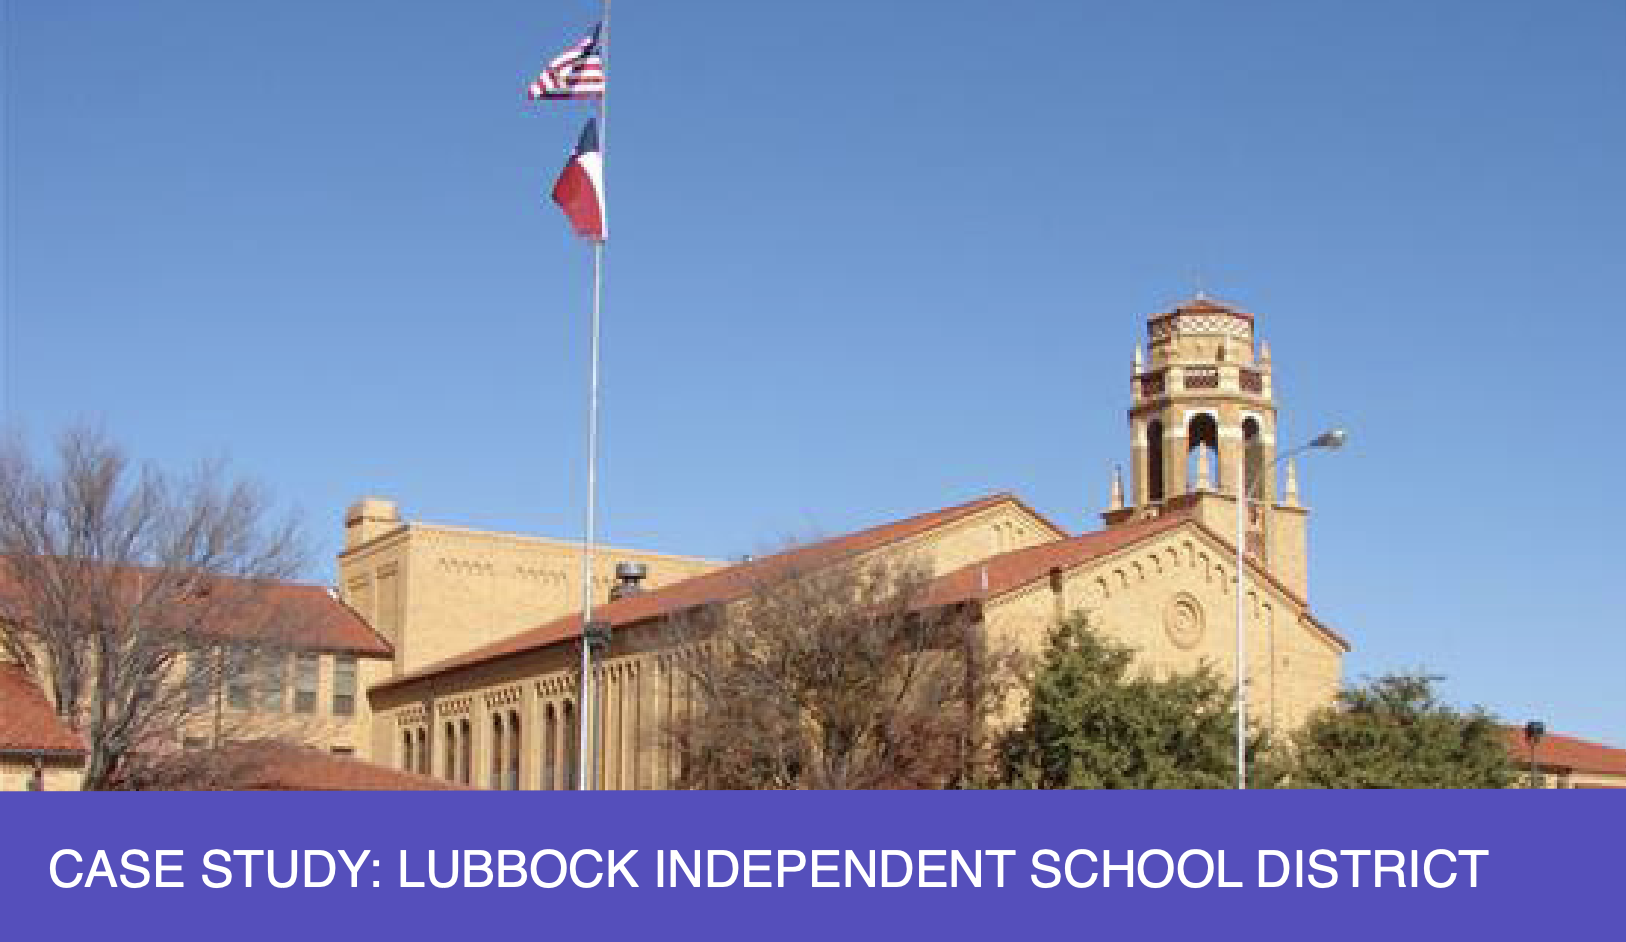 Case Study: Lubbock Independent School District